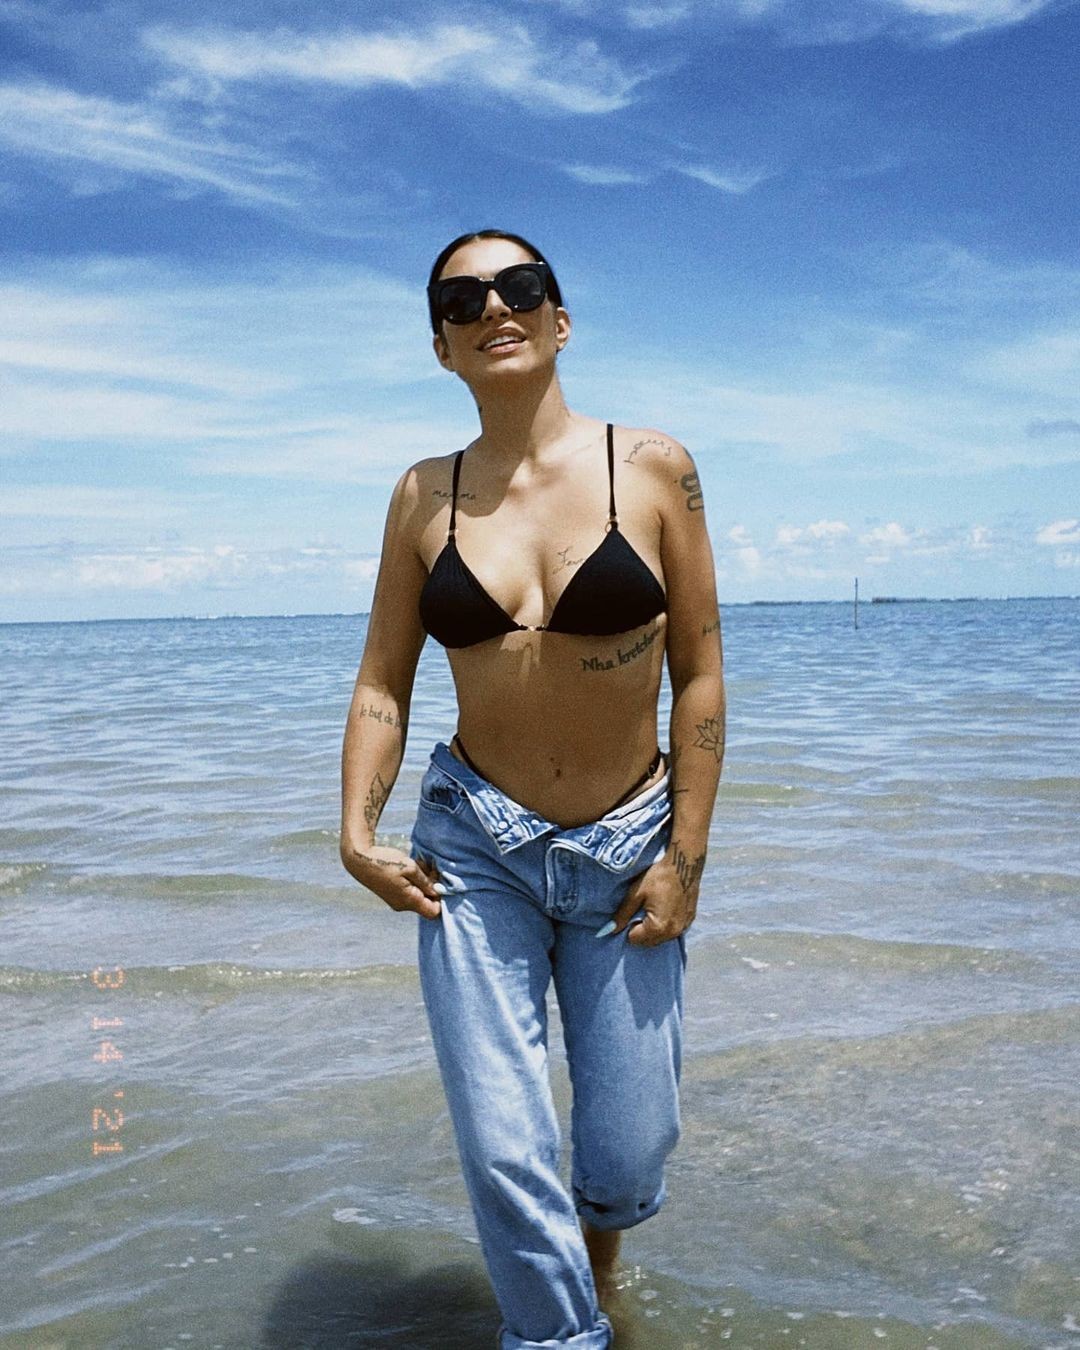 Cleo posa de jeans na praia (Foto: Instagram)